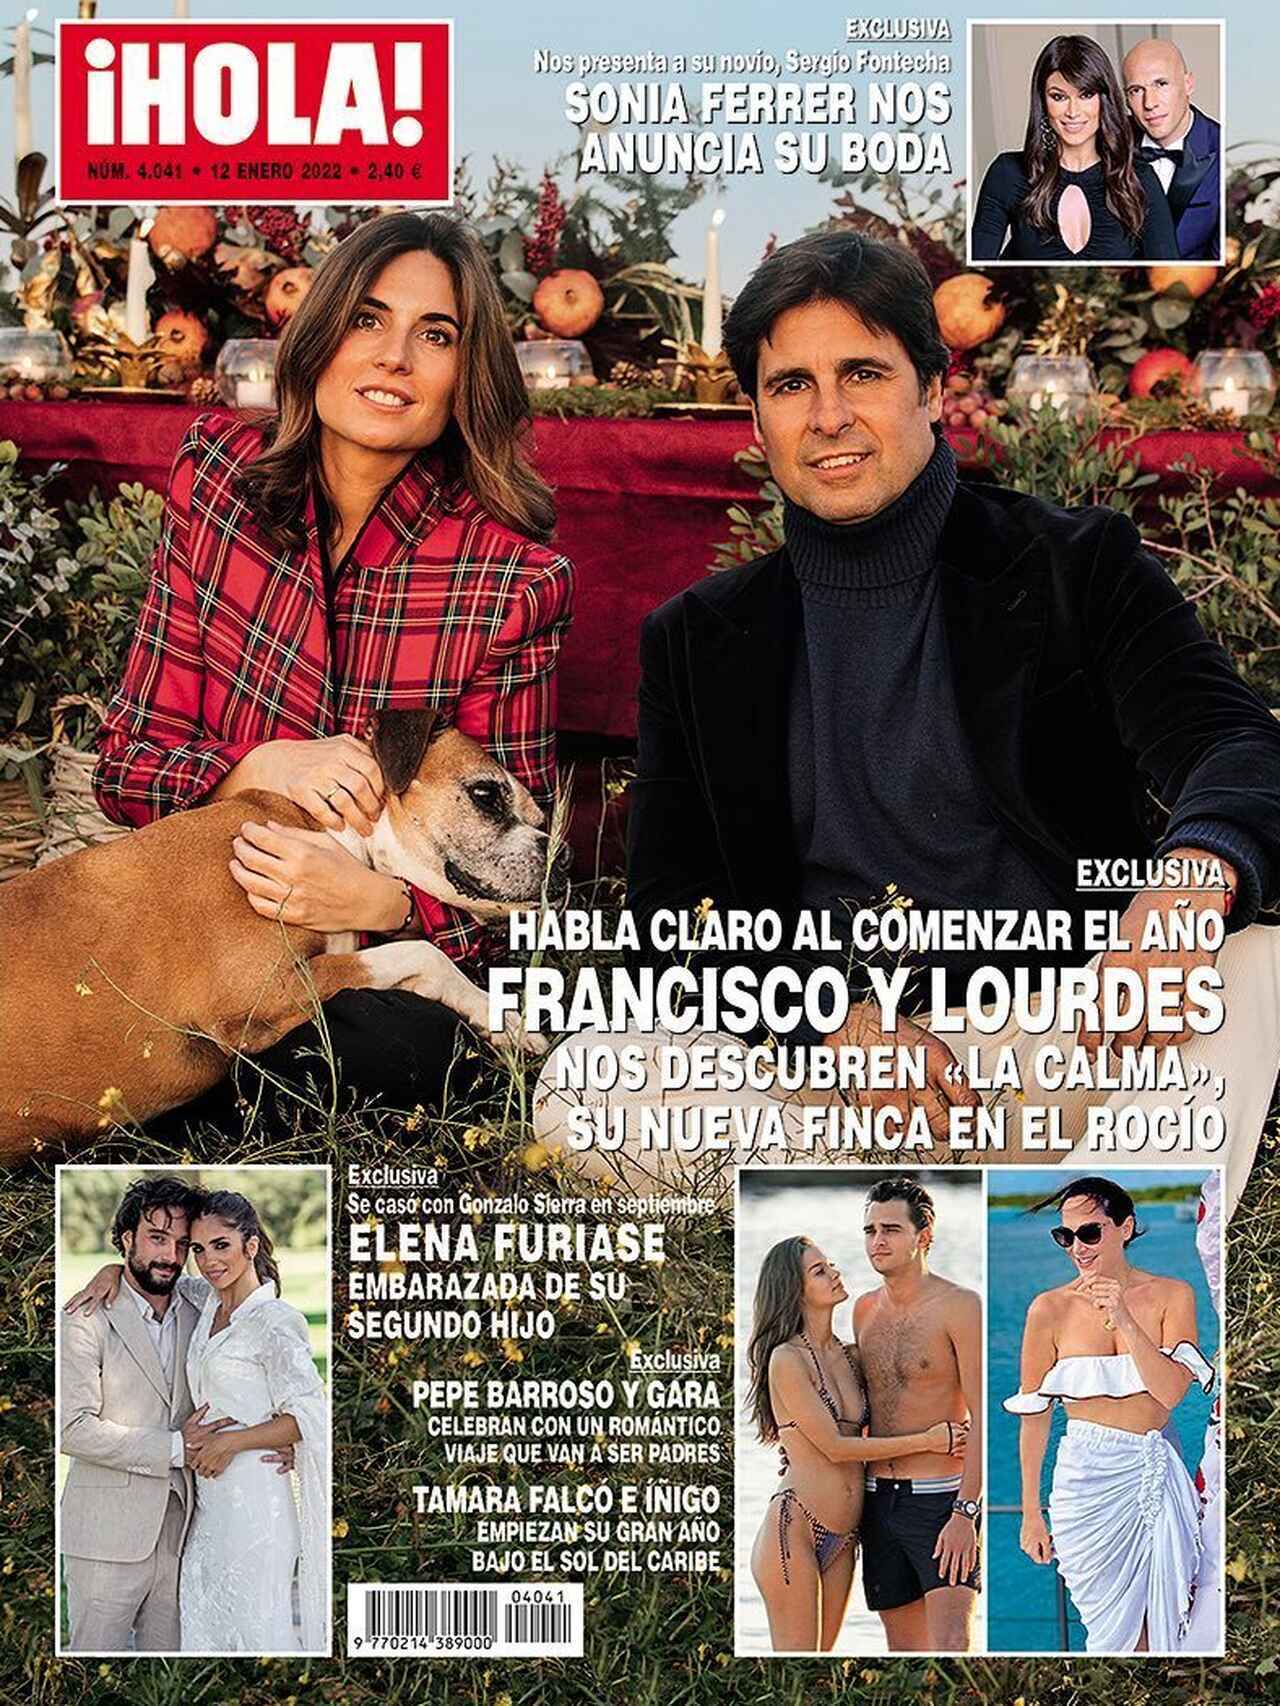 La portada de la revista '¡HOLA!' donde se anuncia el embarazo de Elena Furiase.